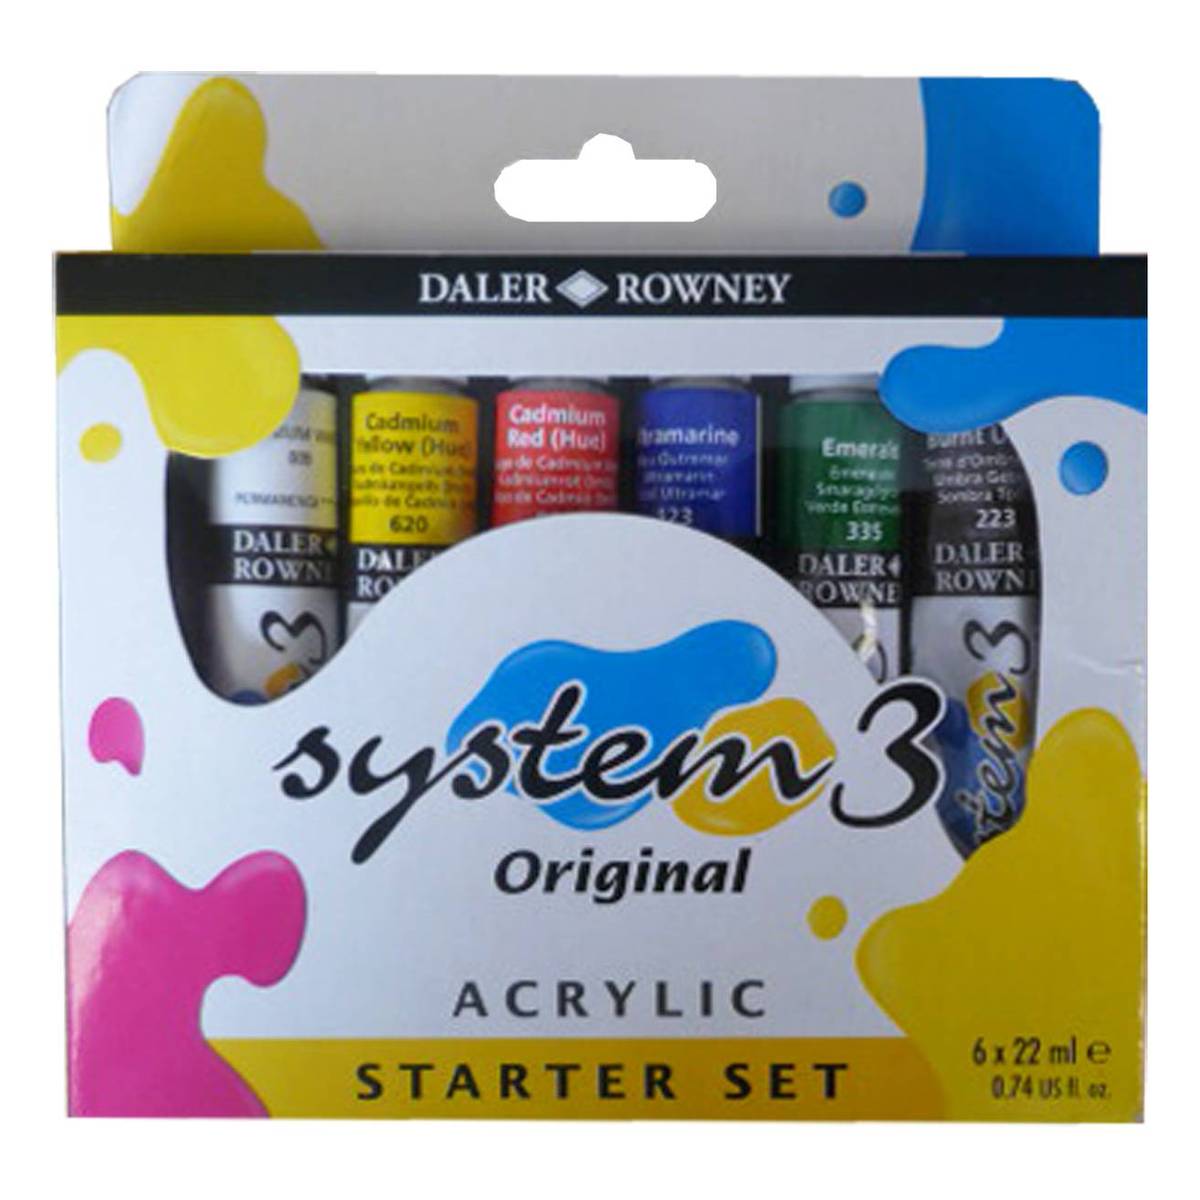 DALER-ROWNEY System 3 Acrylic Paint Sets Intro Set - 20445536